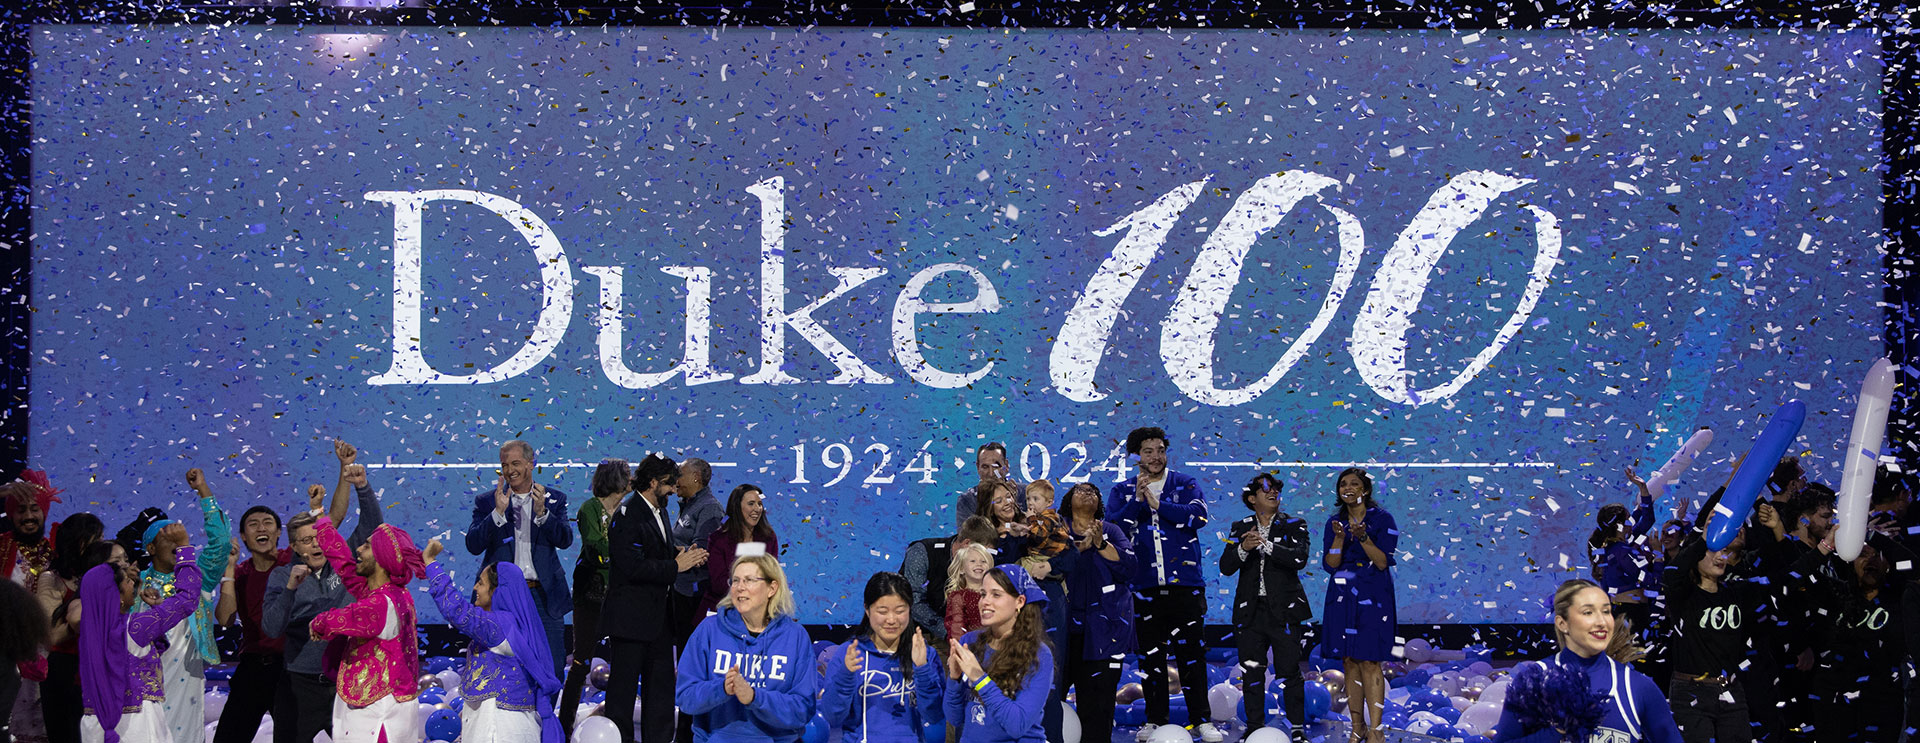 Confetti falls in front of the Duke100 logo on the big screen